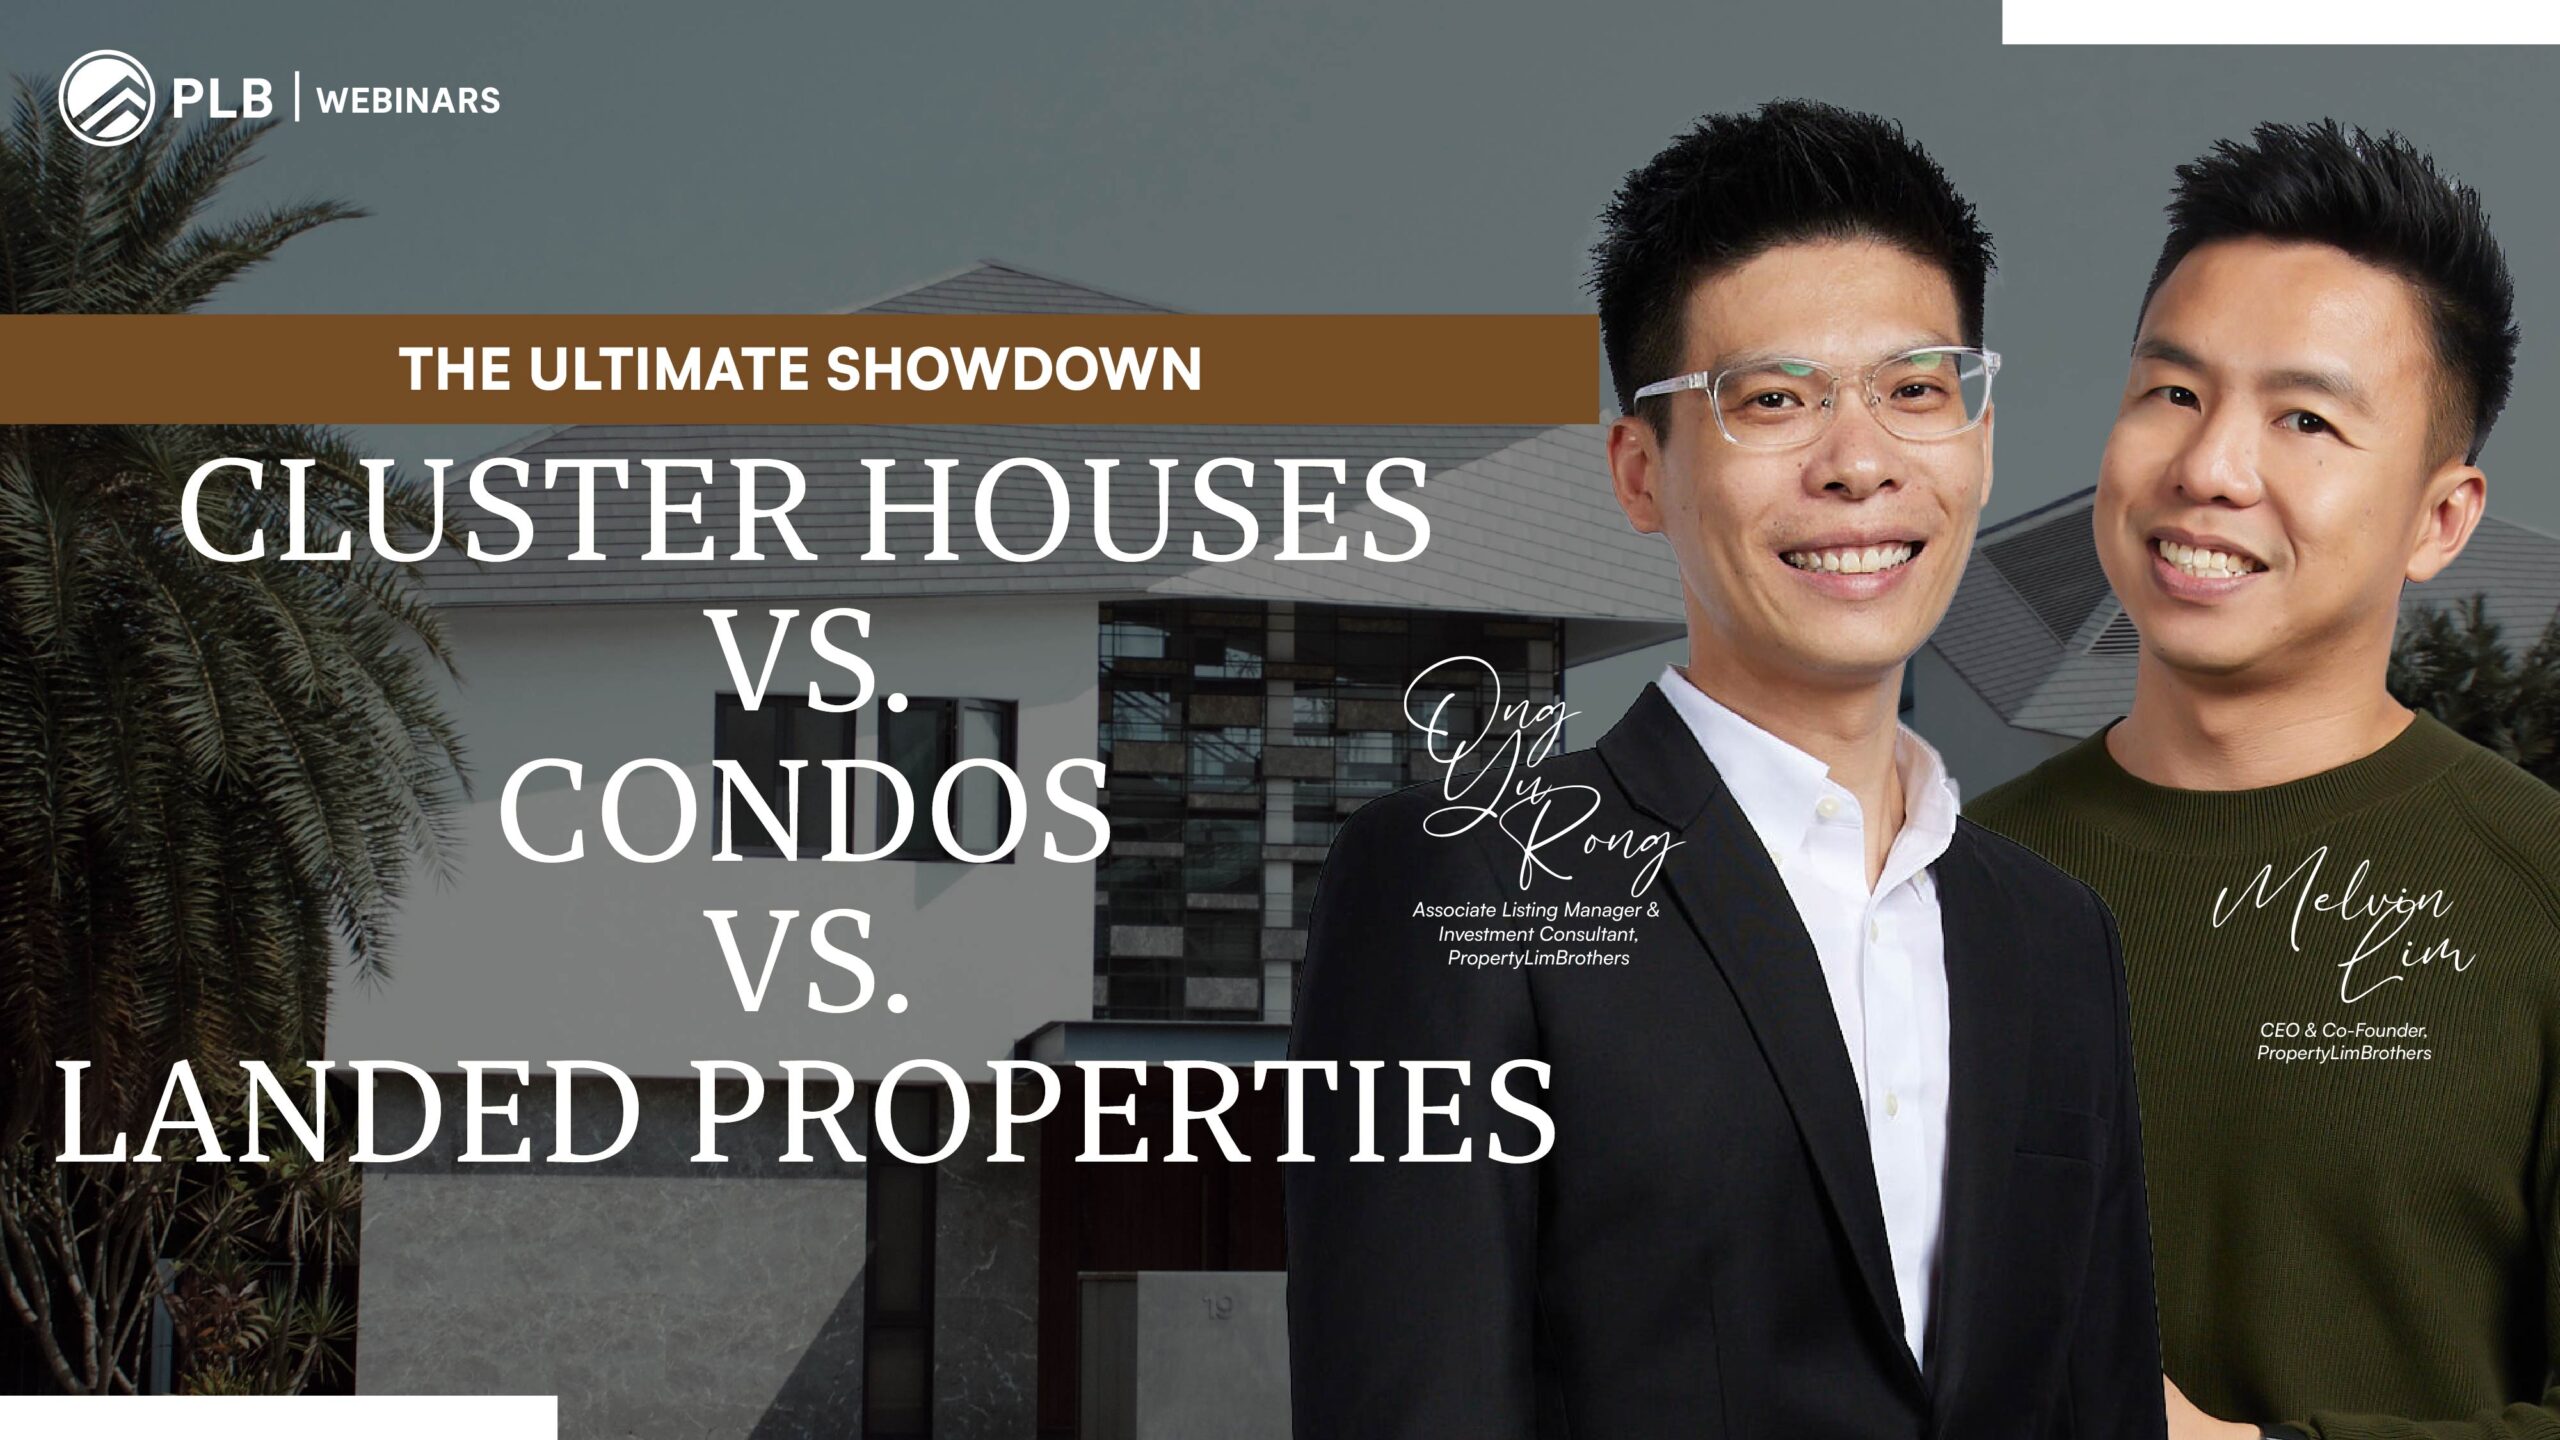 The Ultimate Showdown: Cluster Houses vs. Condos vs. Landed Properties